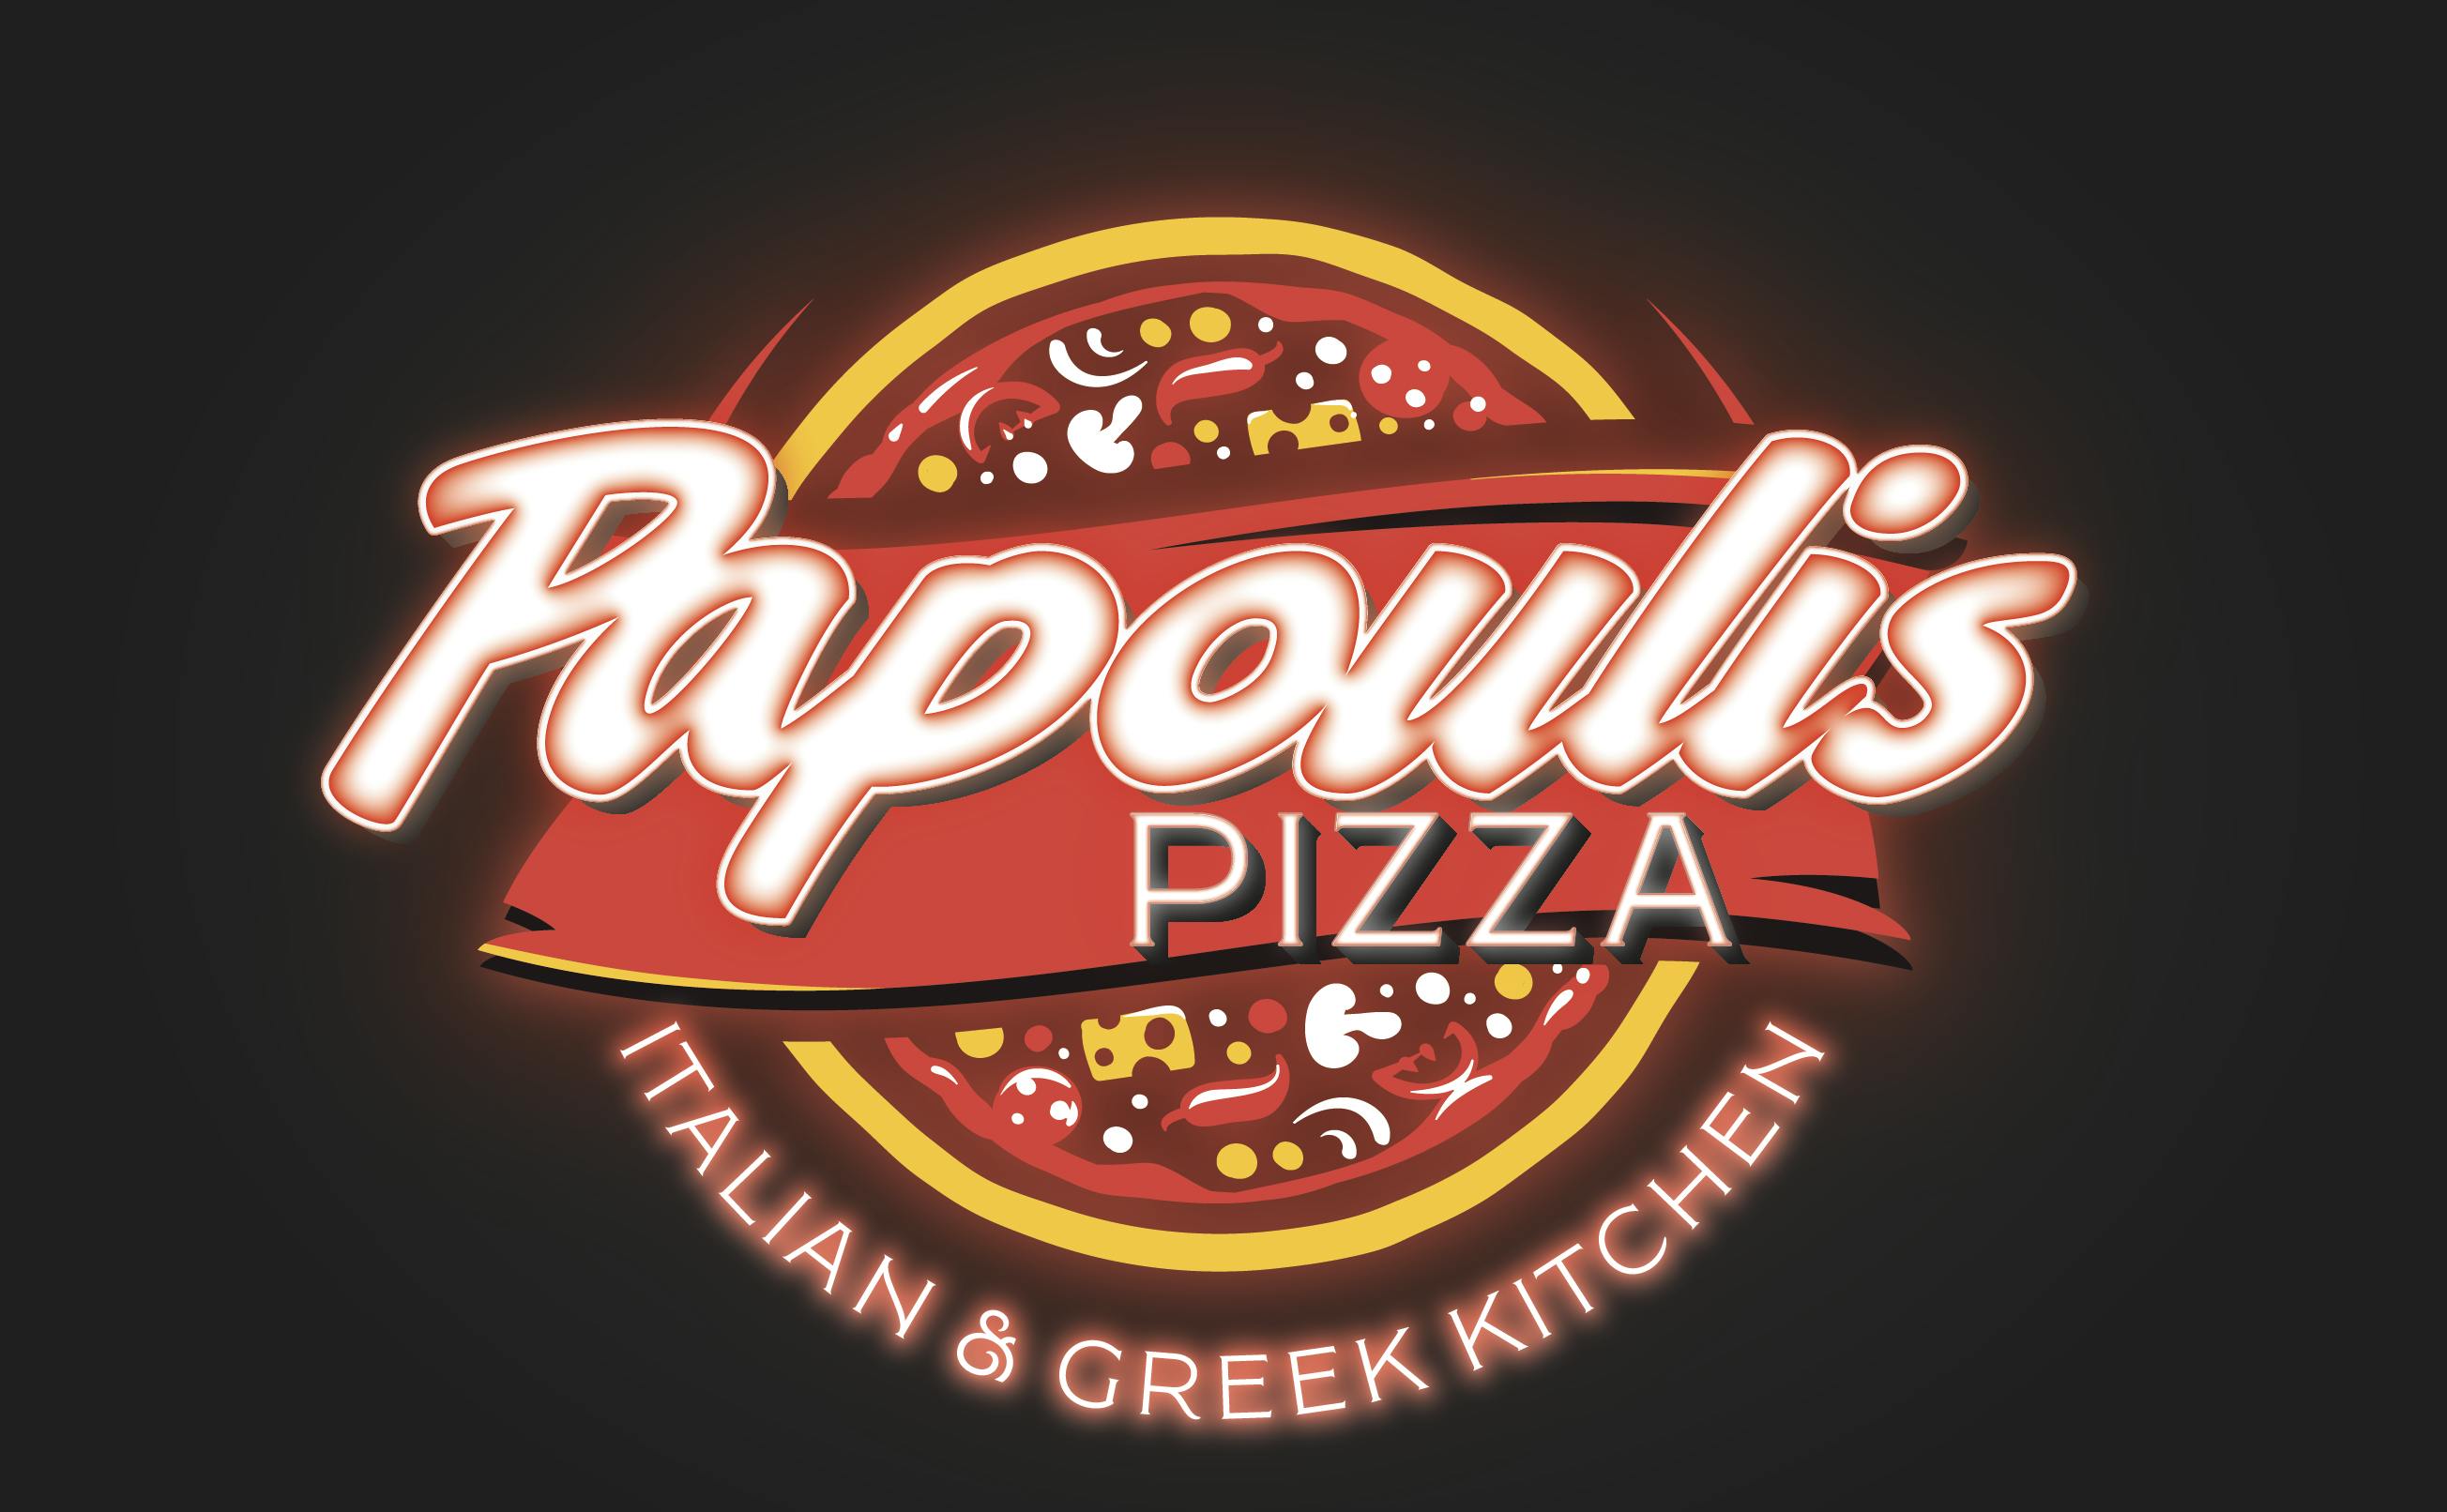 Papouli's Brick Oven Pizza & Restaurant